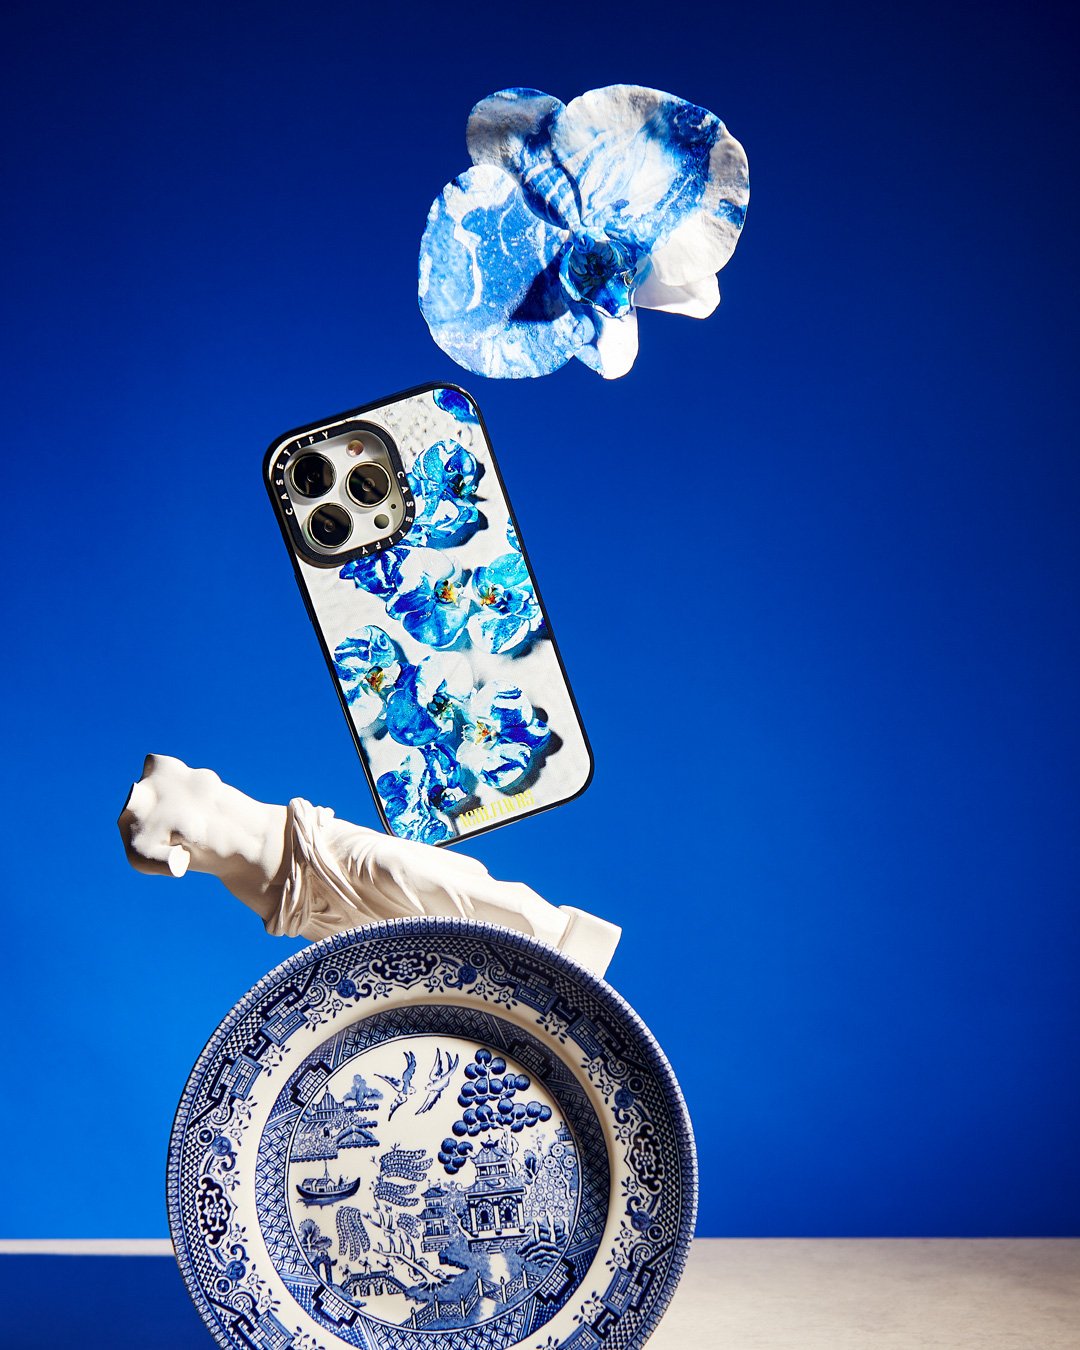 ACID.FLWRS-x-Casetify-shot-by-Mark-Sherborne-delft-blue-flowers-iphone.jpg